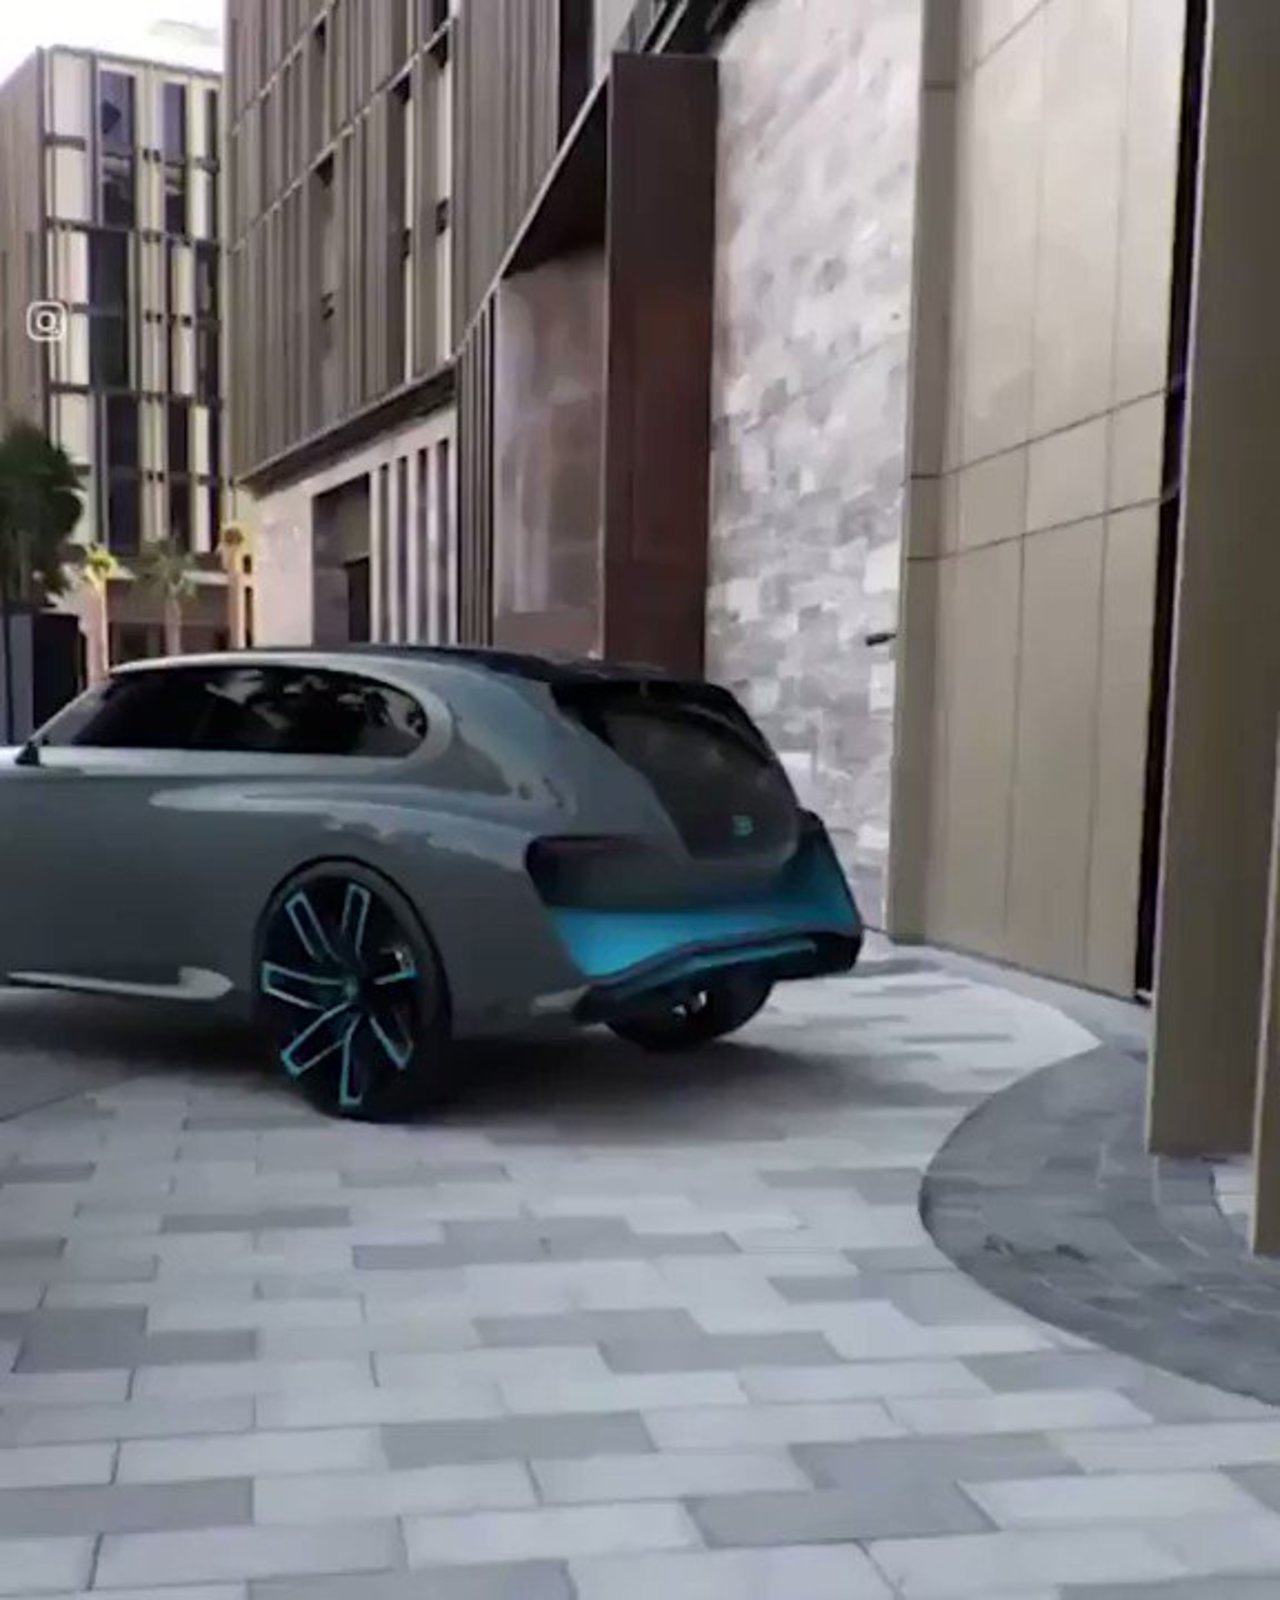 Here's the first Bugatti SUV TY by @UNILADTECH #ArtificialIntelligence #innovation #AI Cc: @enricomolinari @thomas_harrer @ipfconline1 @jblefevre60 @adamsconsulting https://t.co/Jm0P1CuudJ